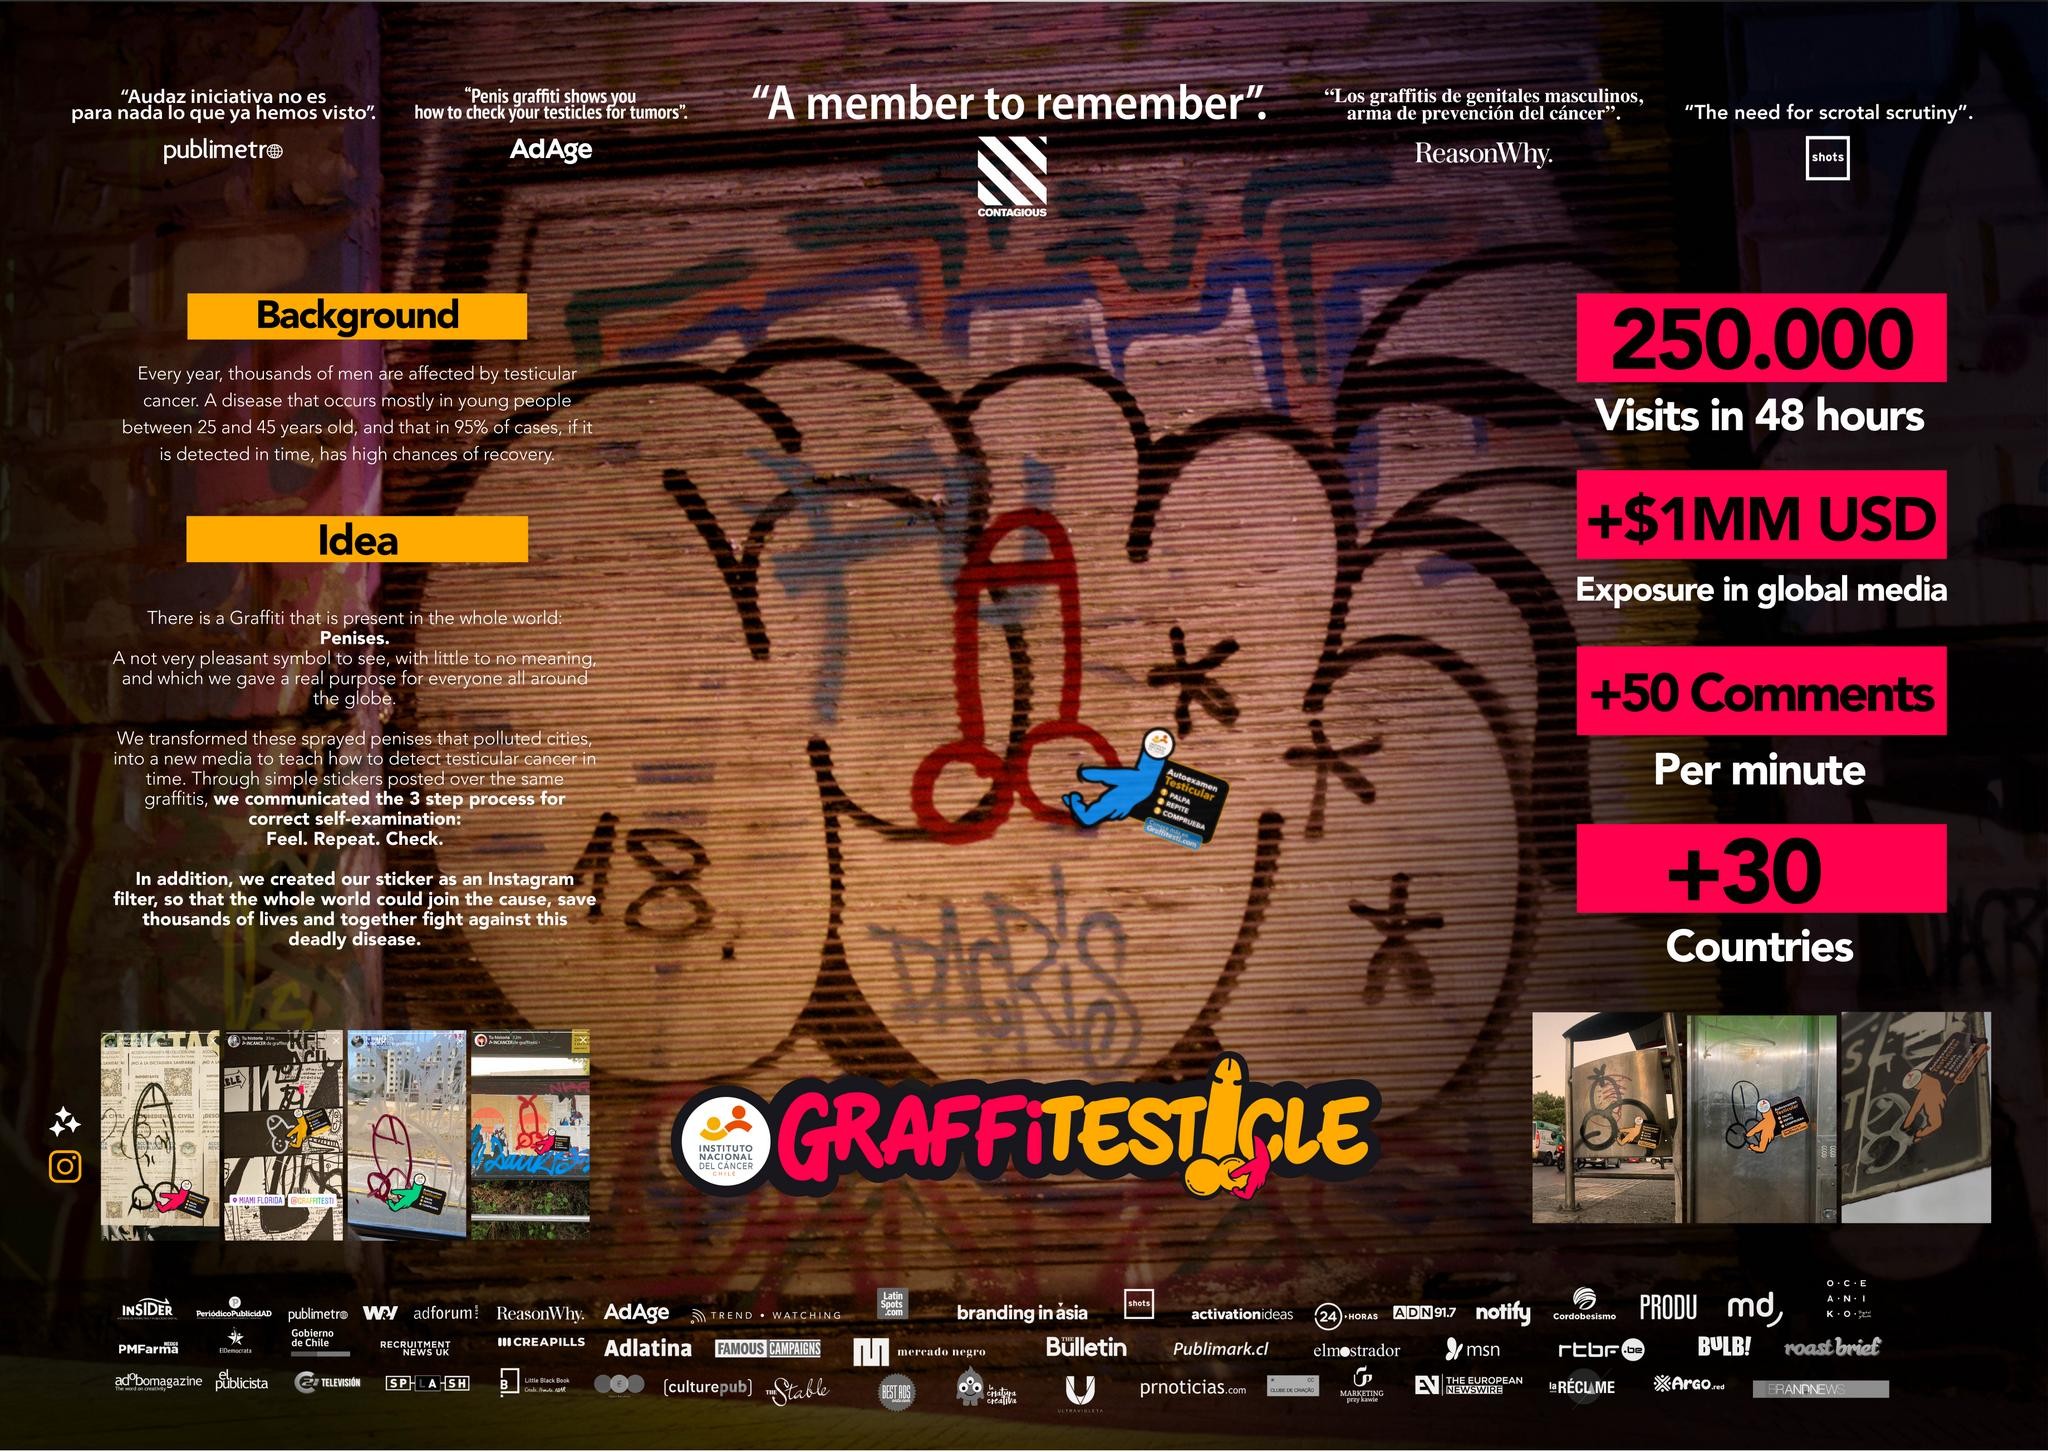 Graffitesticle